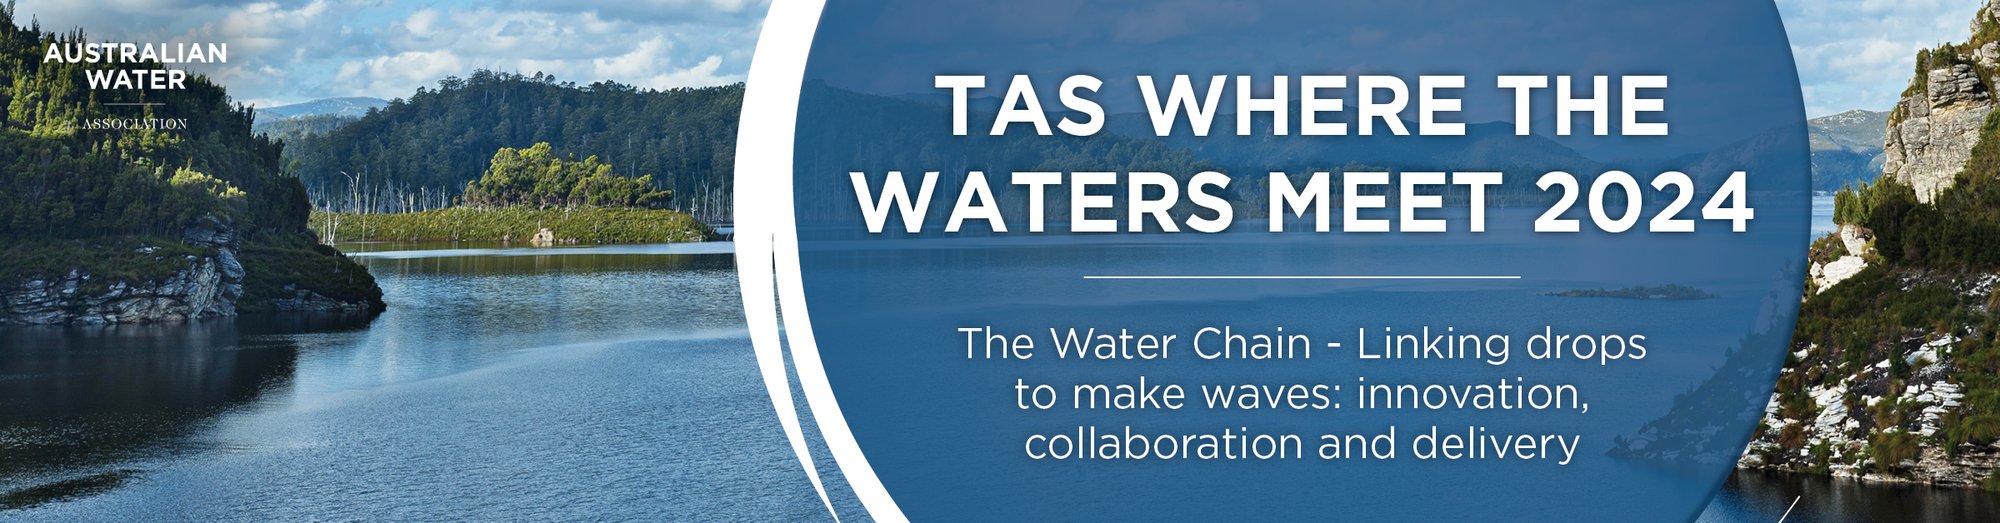 TAS Where the waters meet 2024_HubSpot Event Banner 1200x314px